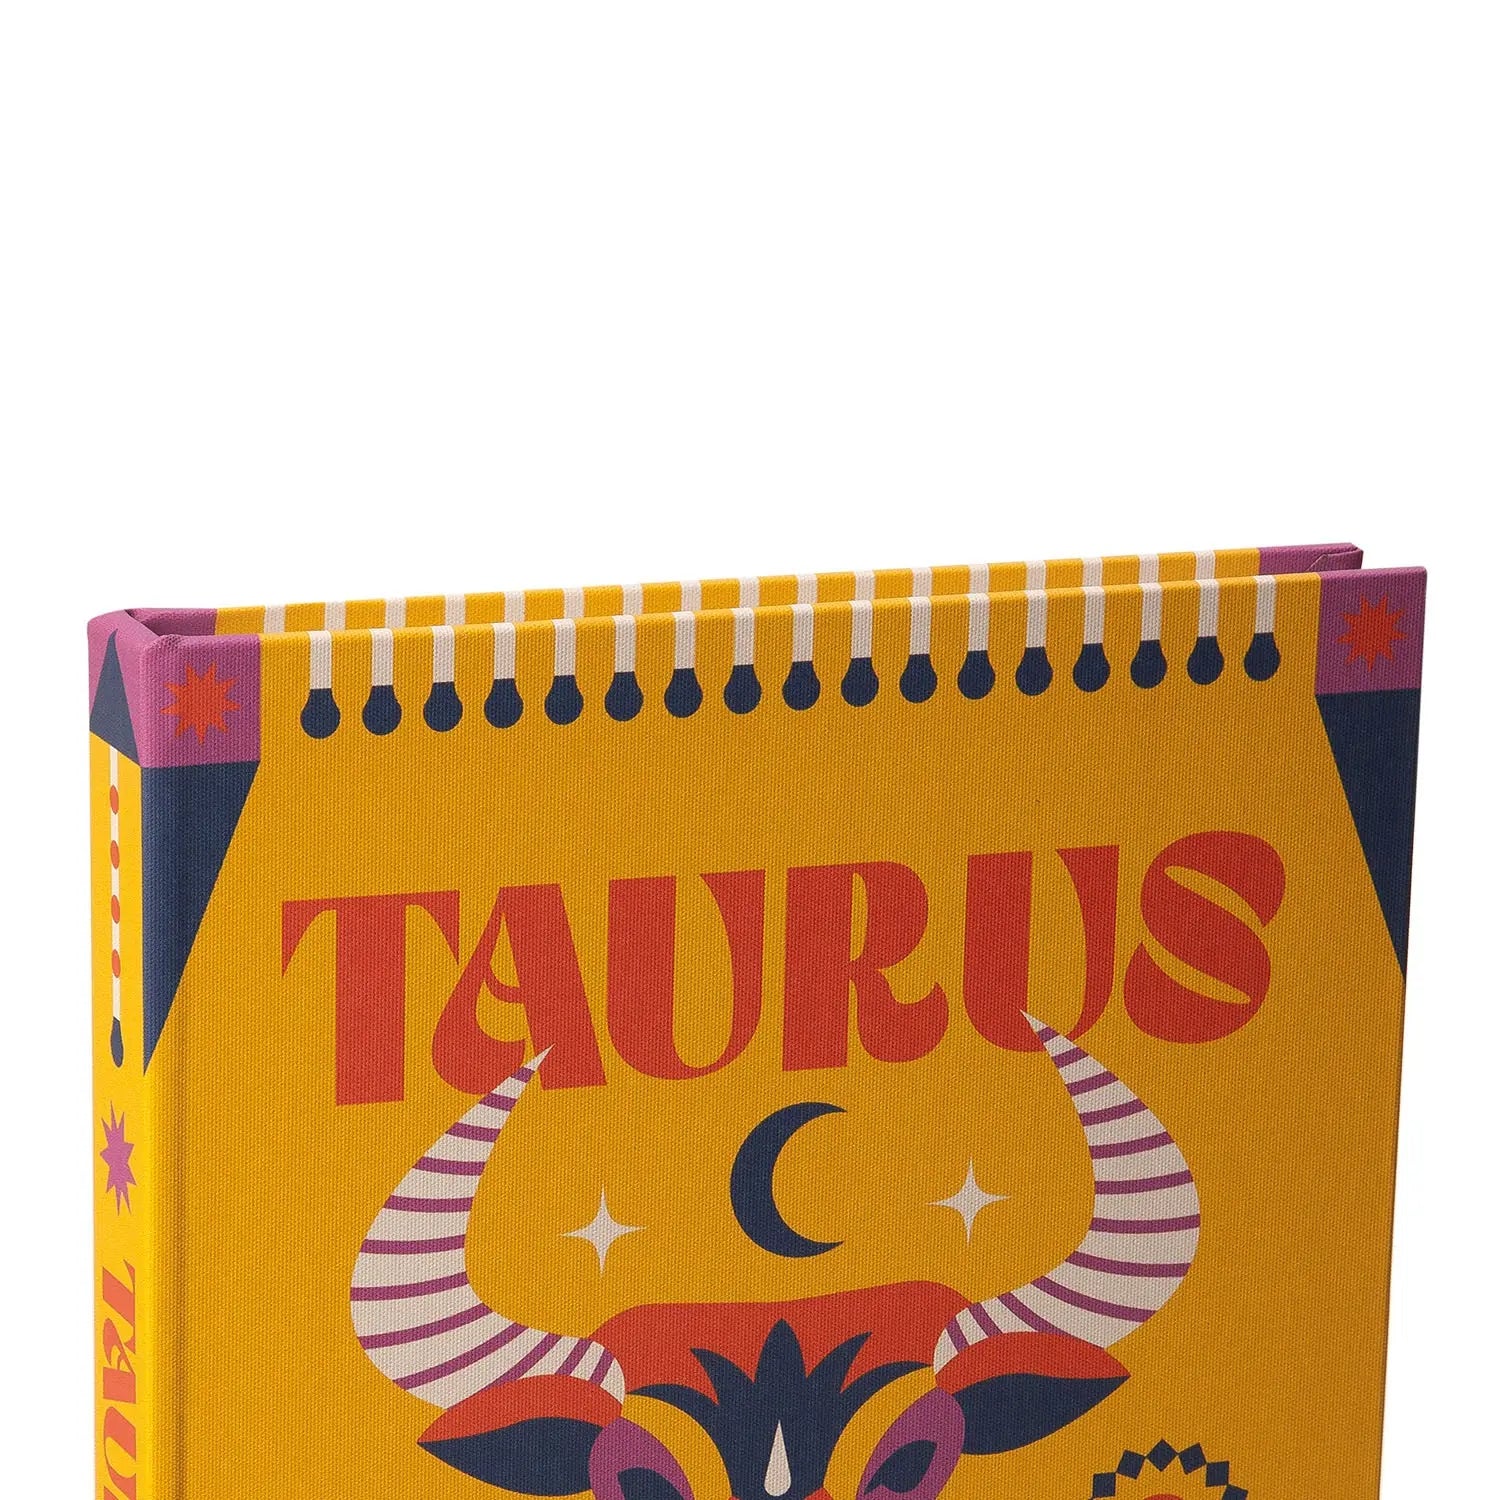 Homedock Book Box Signs 33 x 25 cm – Taurus Mart